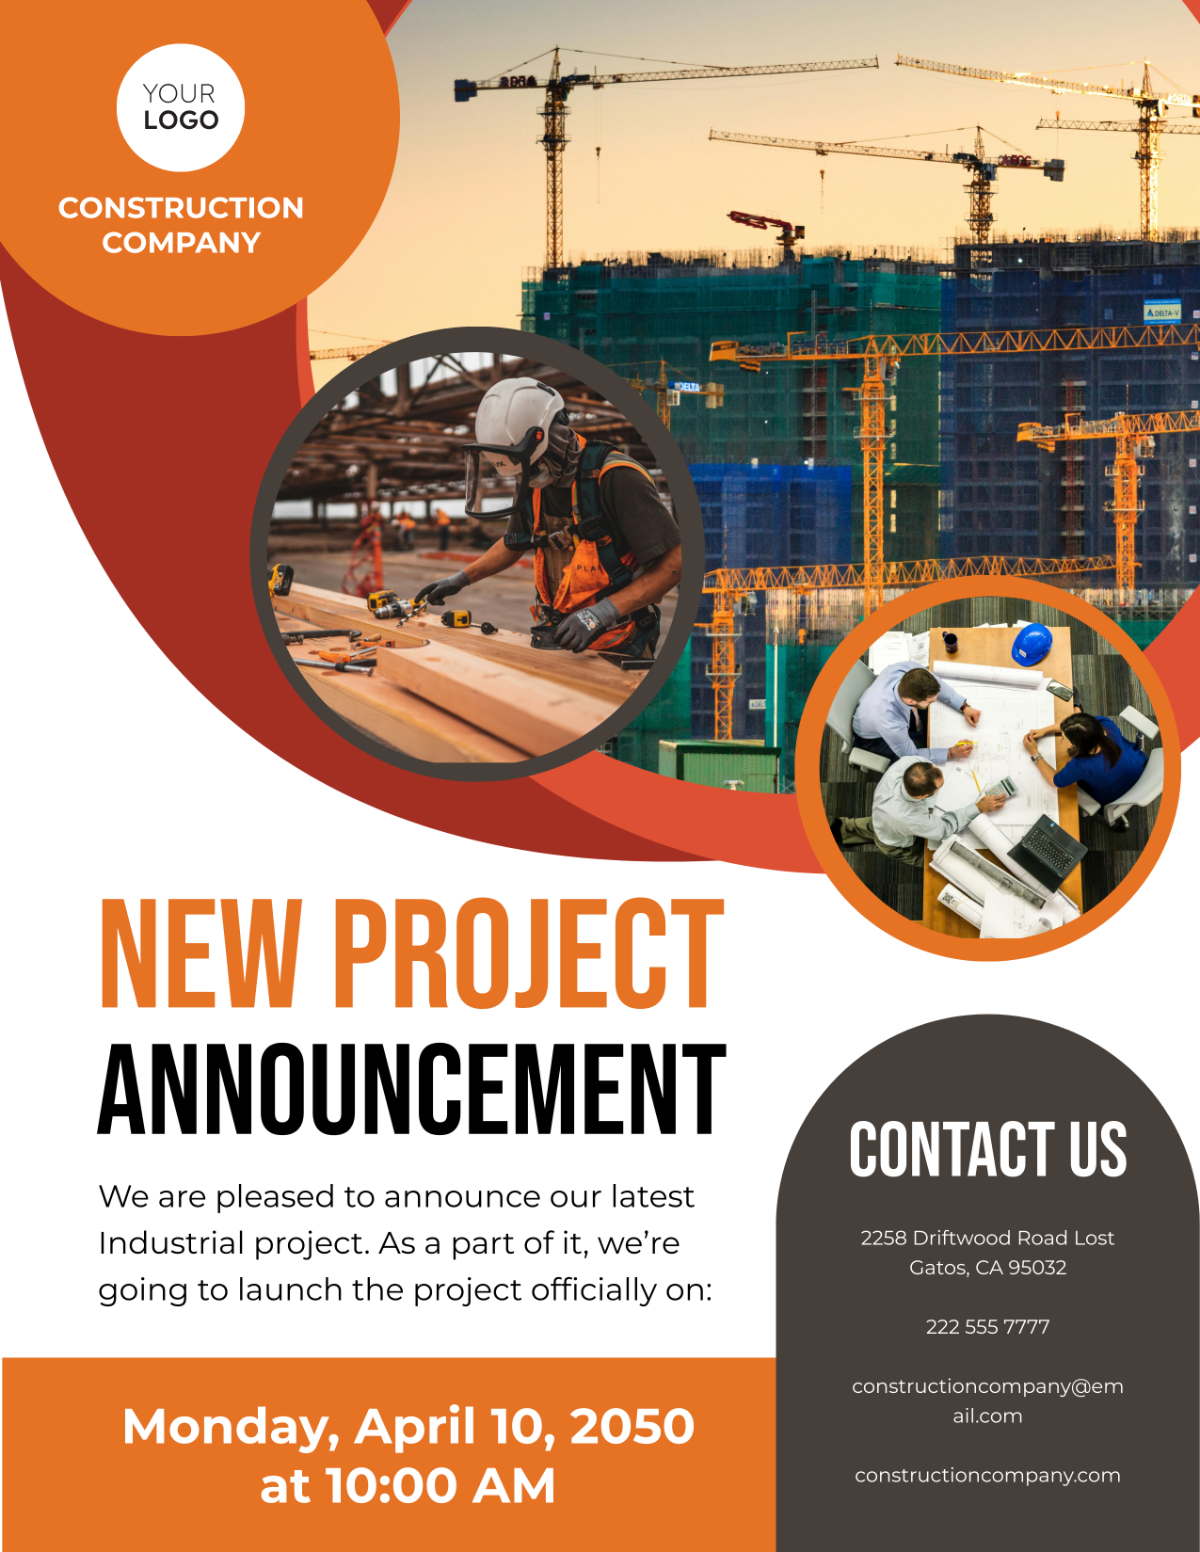 Construction Company Announcement